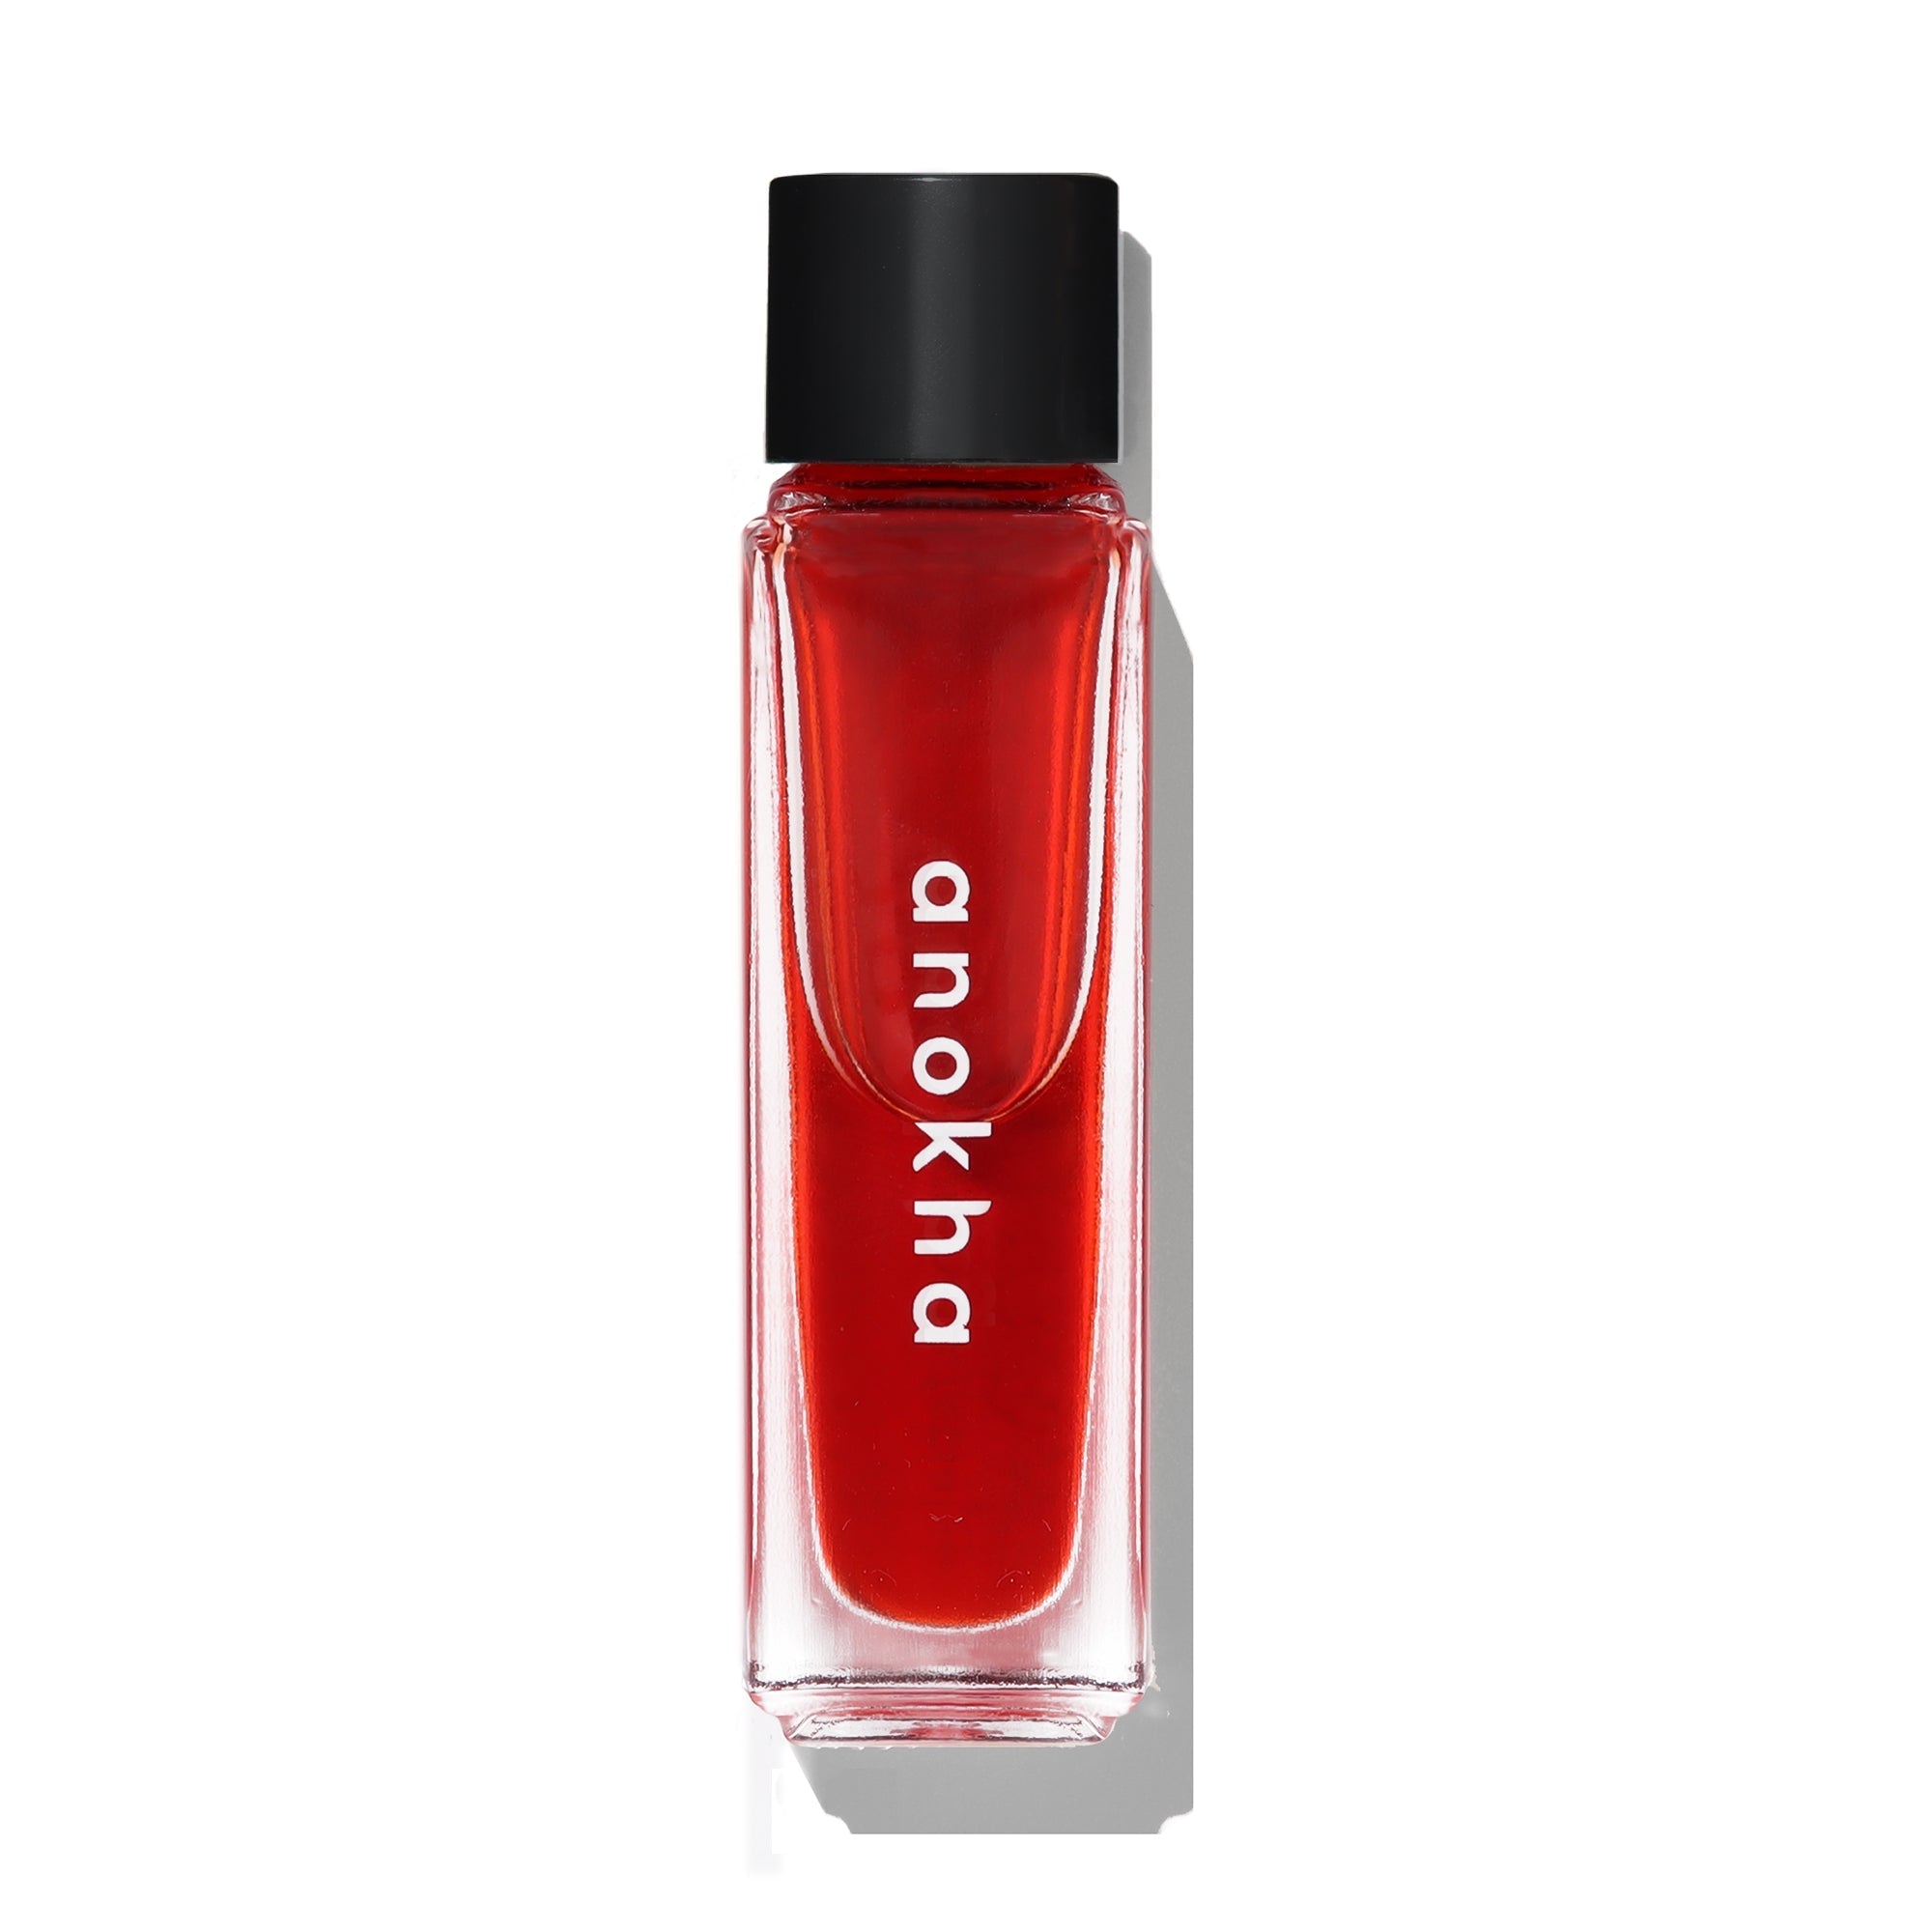 anokha skincare bakuchiol & pomegranate facial oil bottle 7.5 ml 0.25 oz on white background